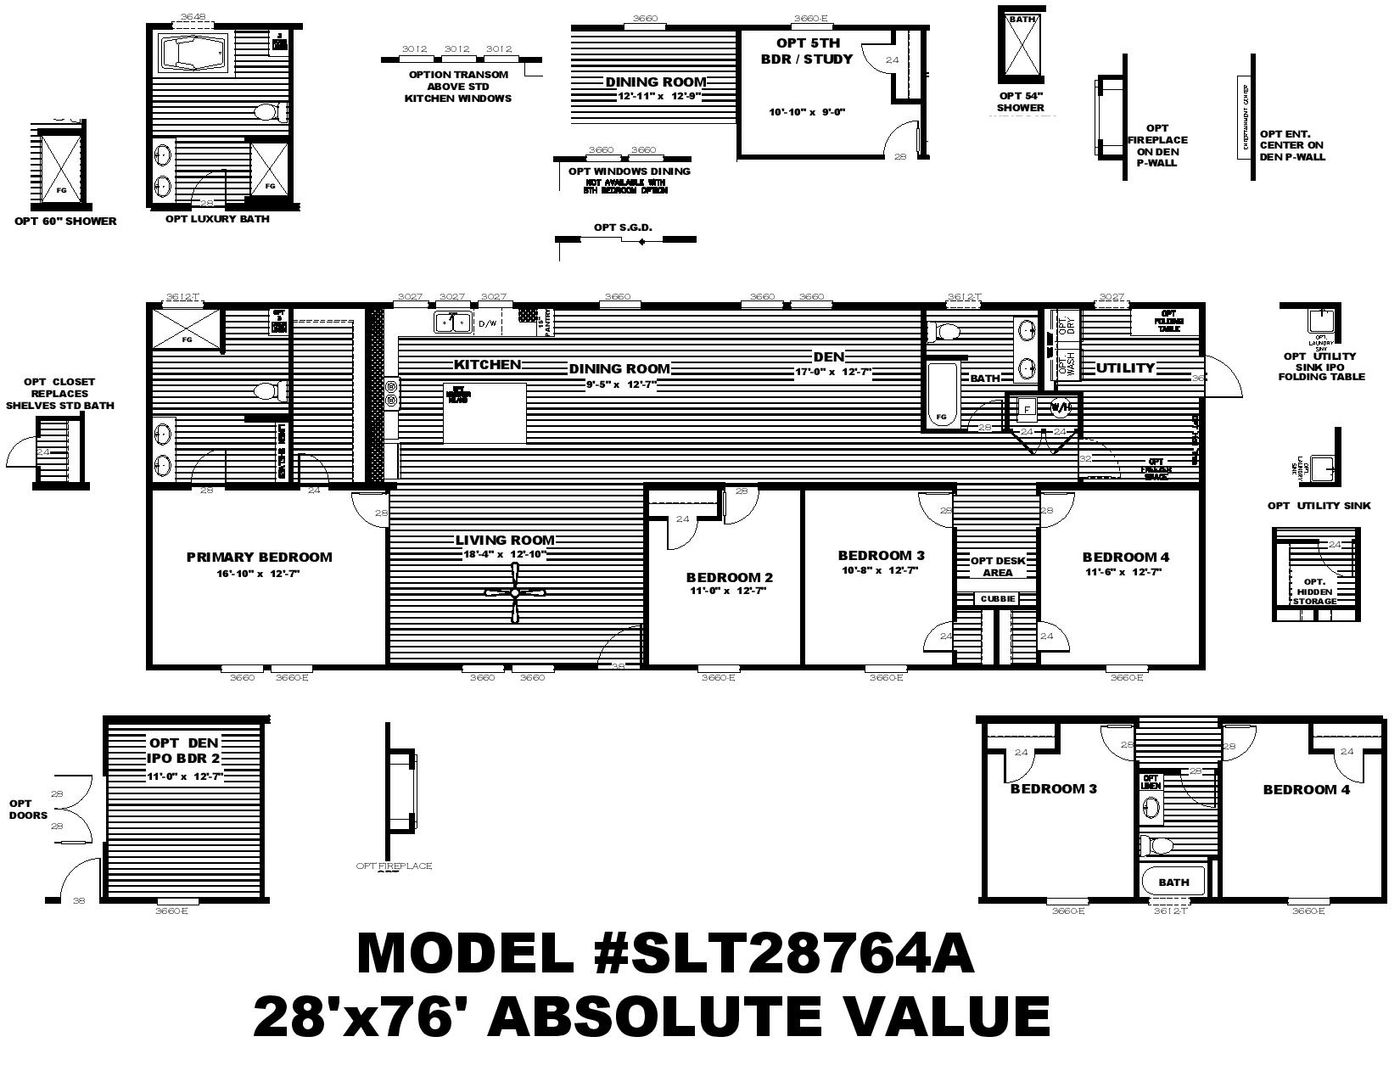 Absolute Value Floor Plan